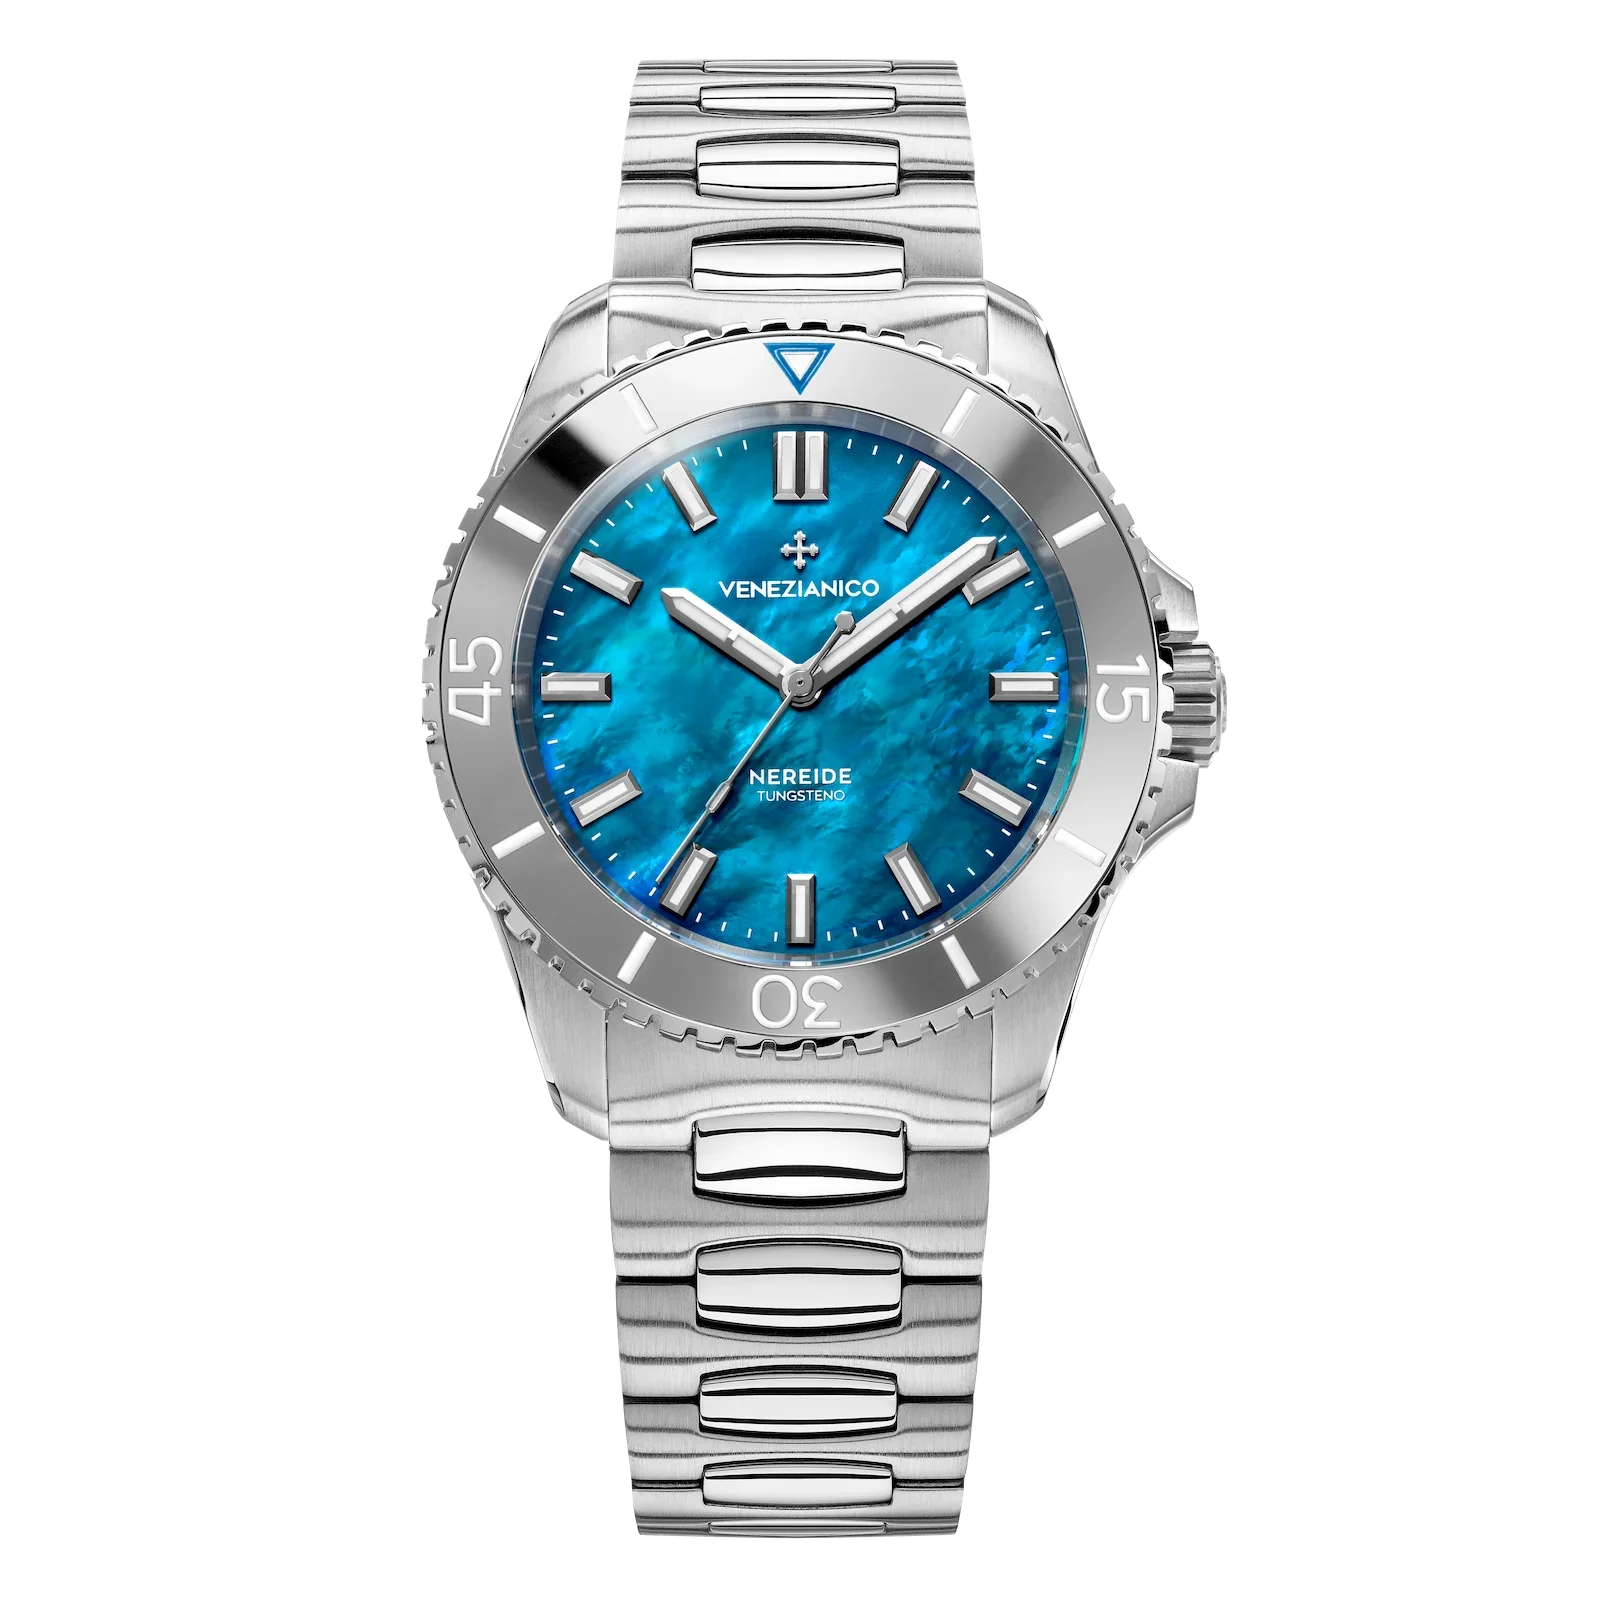 Venezianico Nereide Tungsteno Men's Blue Watch 3121541C